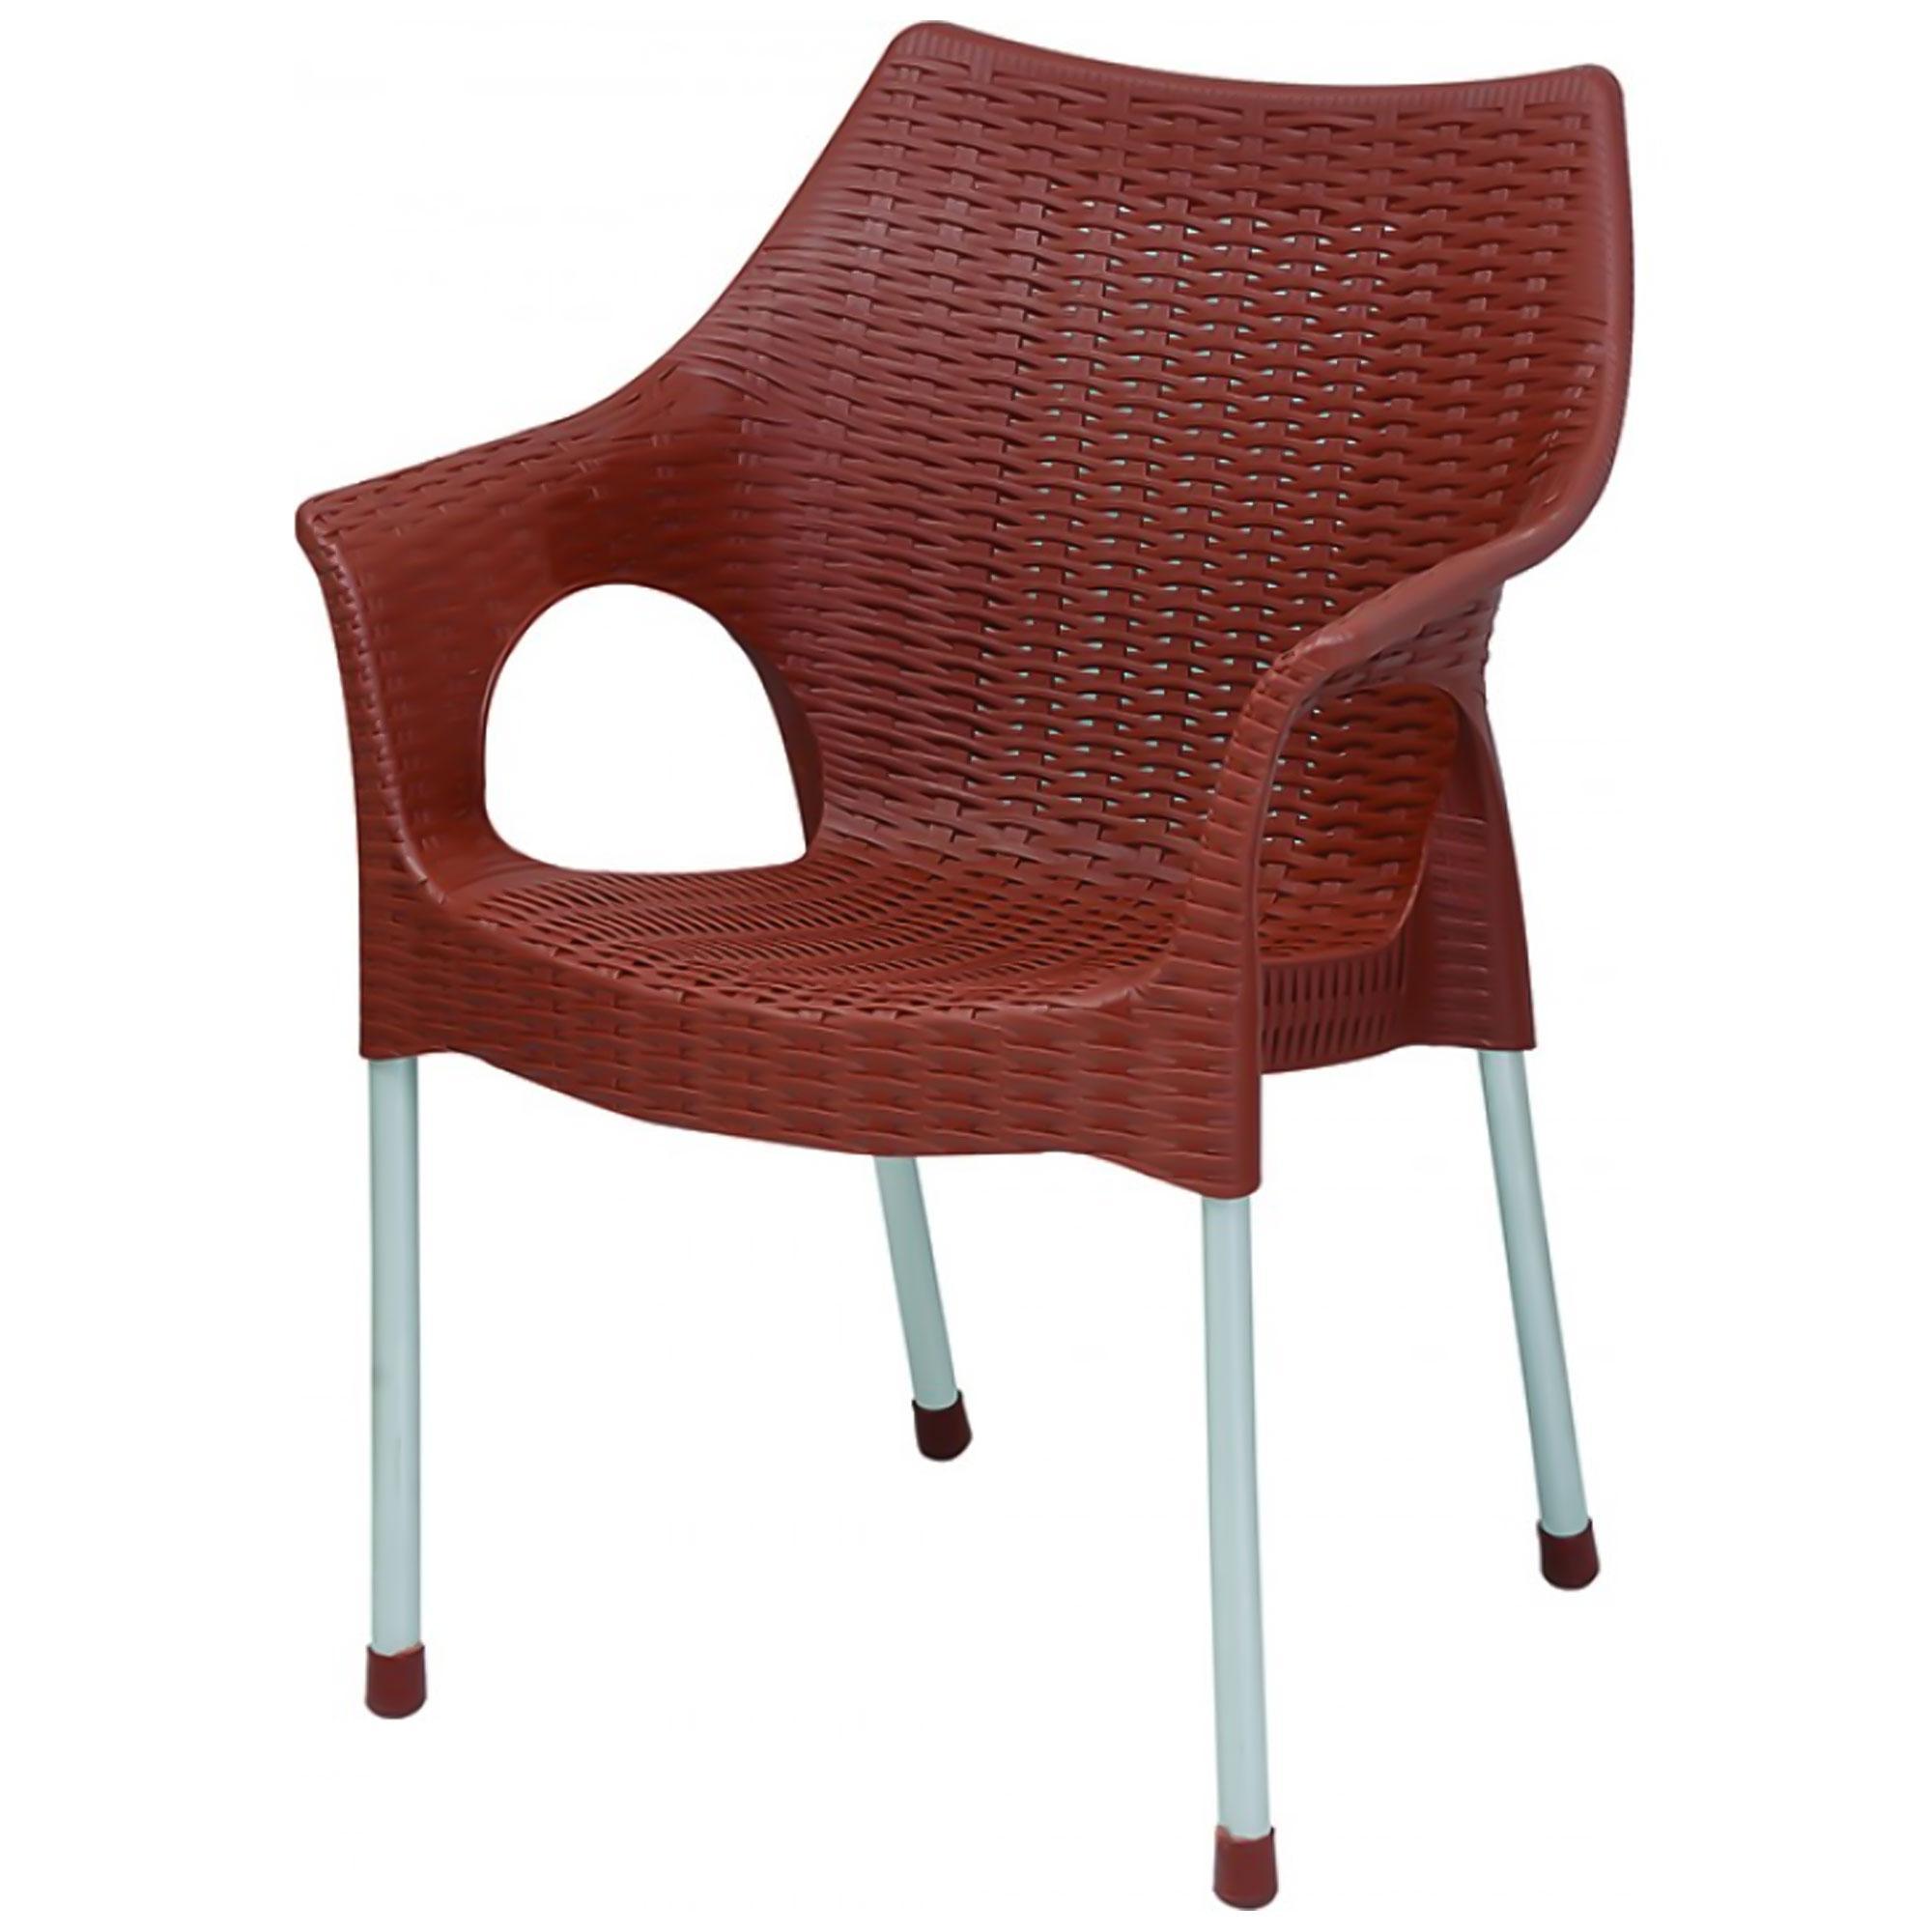 Vip Plastic Chair Rattan Plastic Chair- Brown (boss)